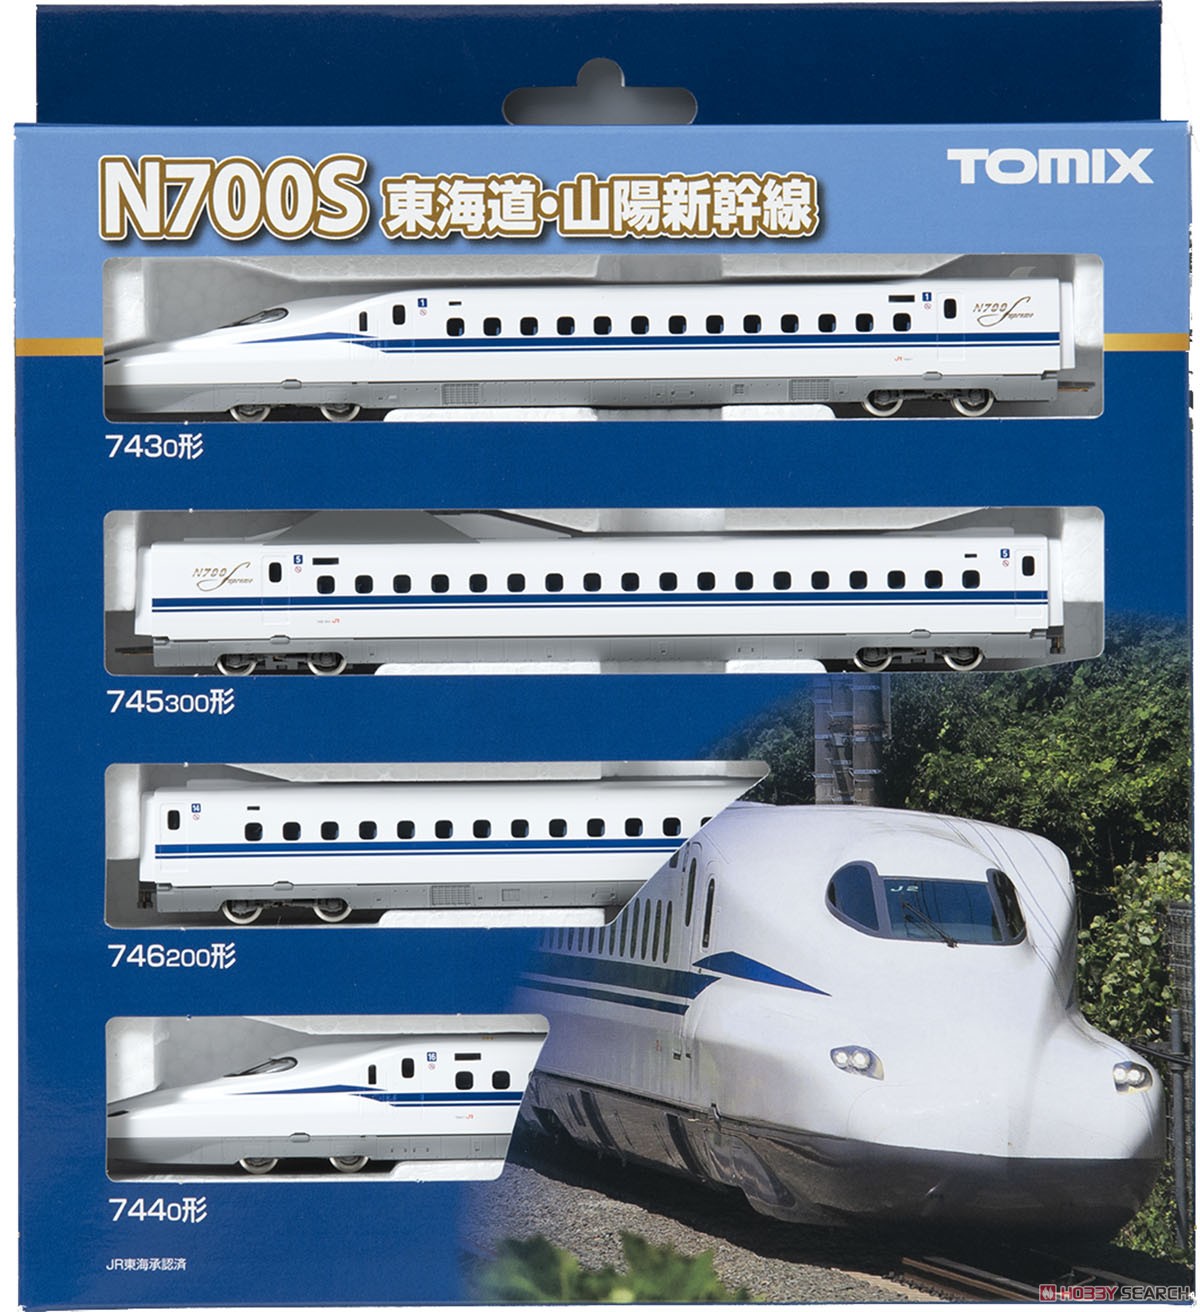 JR N700系 (N700S) 東海道・山陽新幹線 基本セット (基本・4両セット) (鉄道模型) 商品画像11